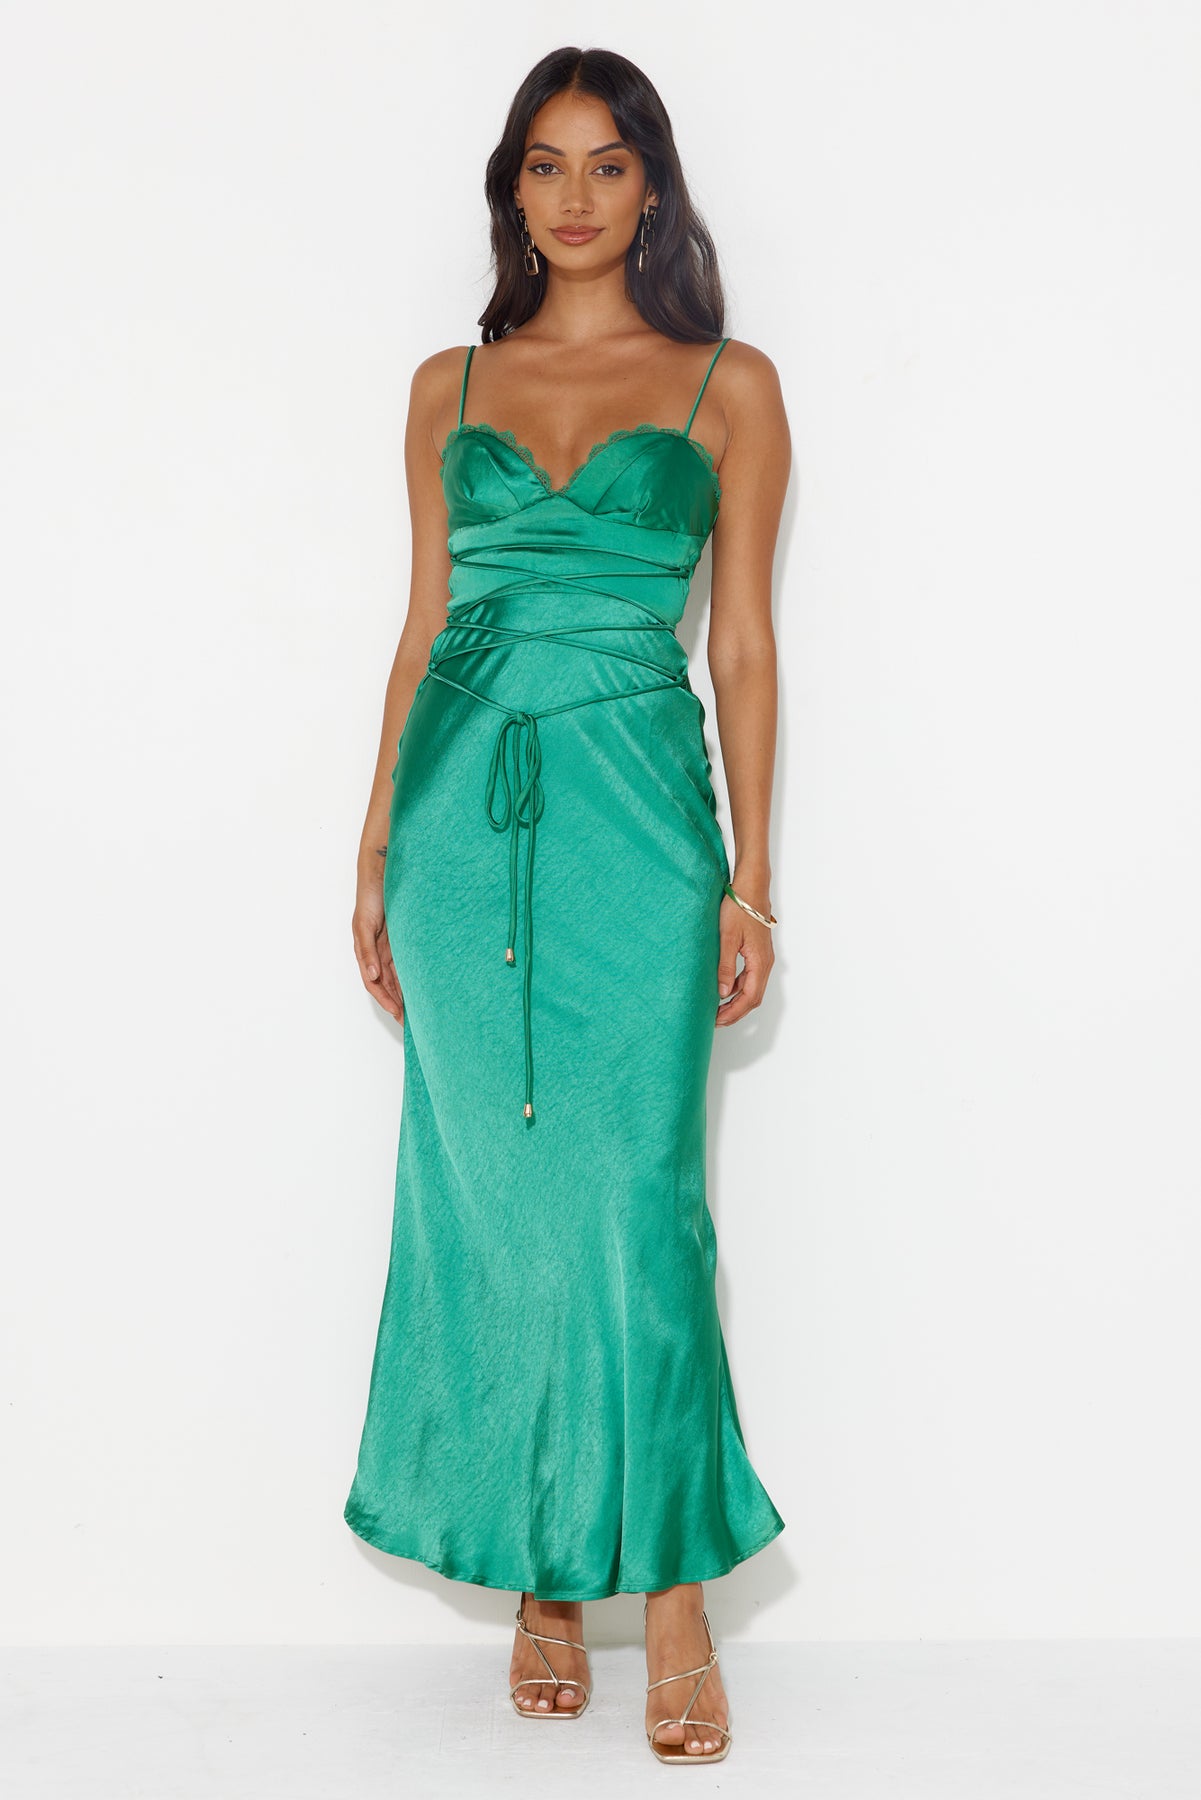 Shop Formal Dress - Dancing Pixie Satin Maxi Dress Green featured image